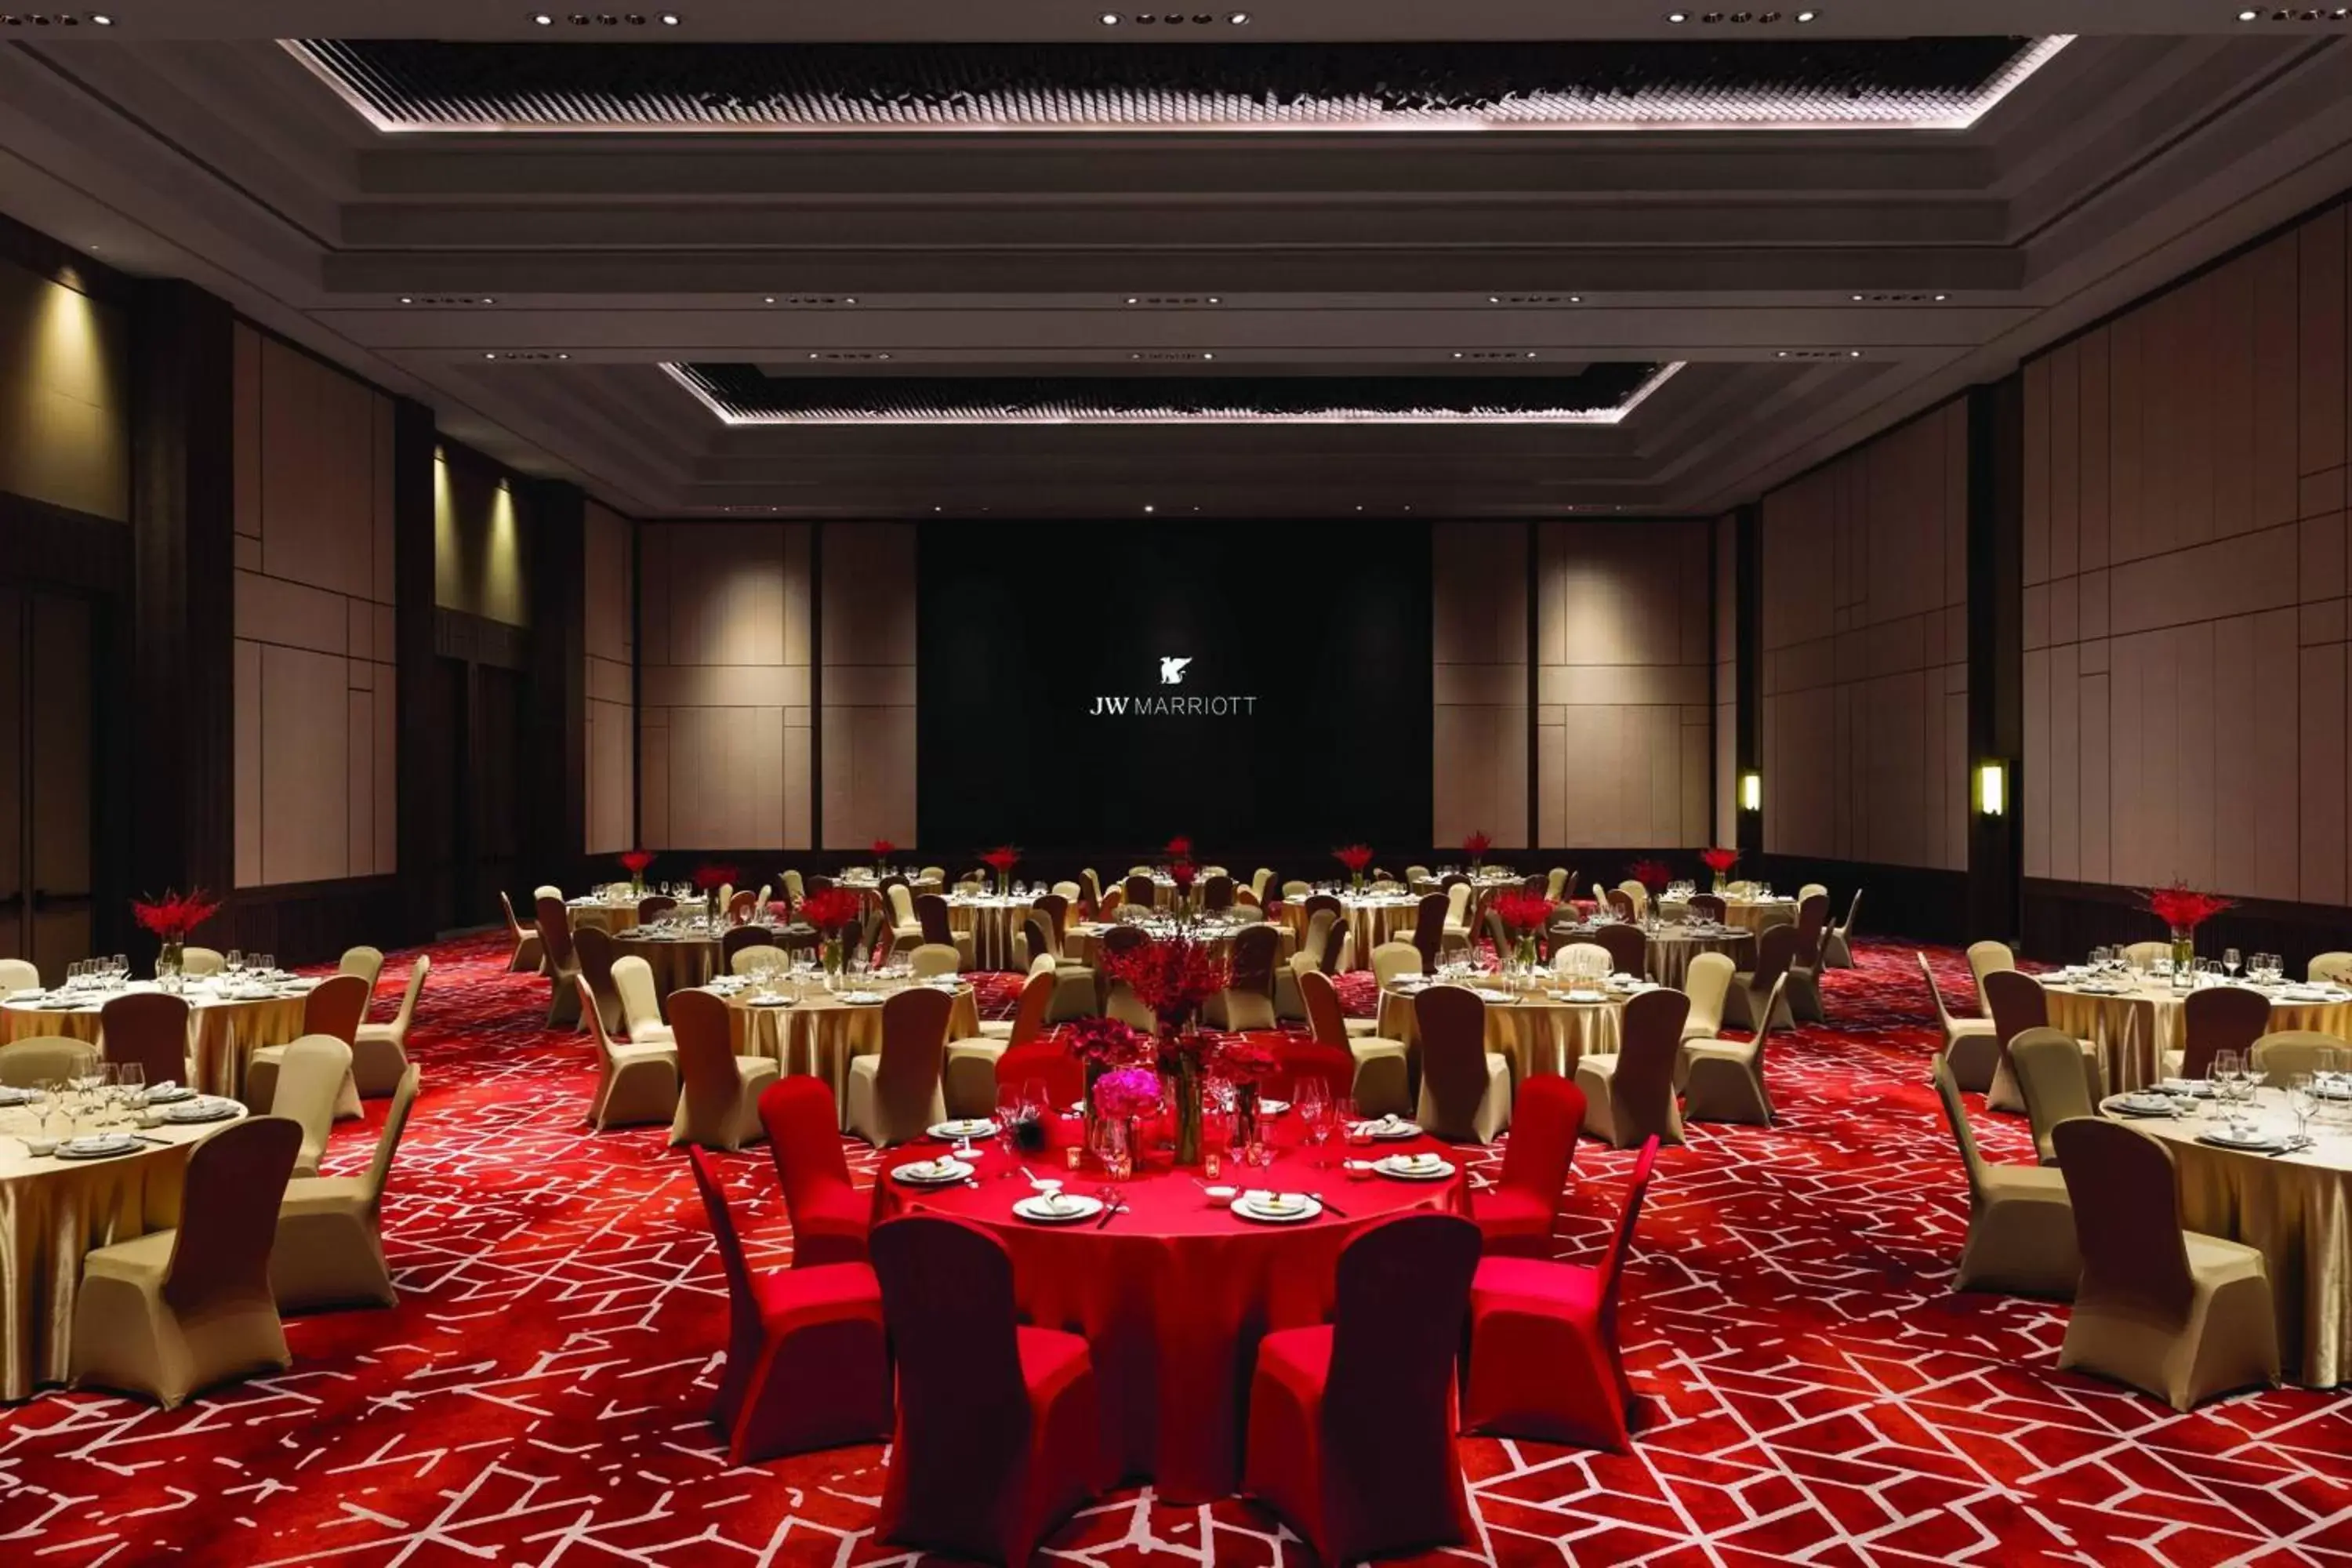 Meeting/conference room, Banquet Facilities in JW Marriott Hotel Qufu